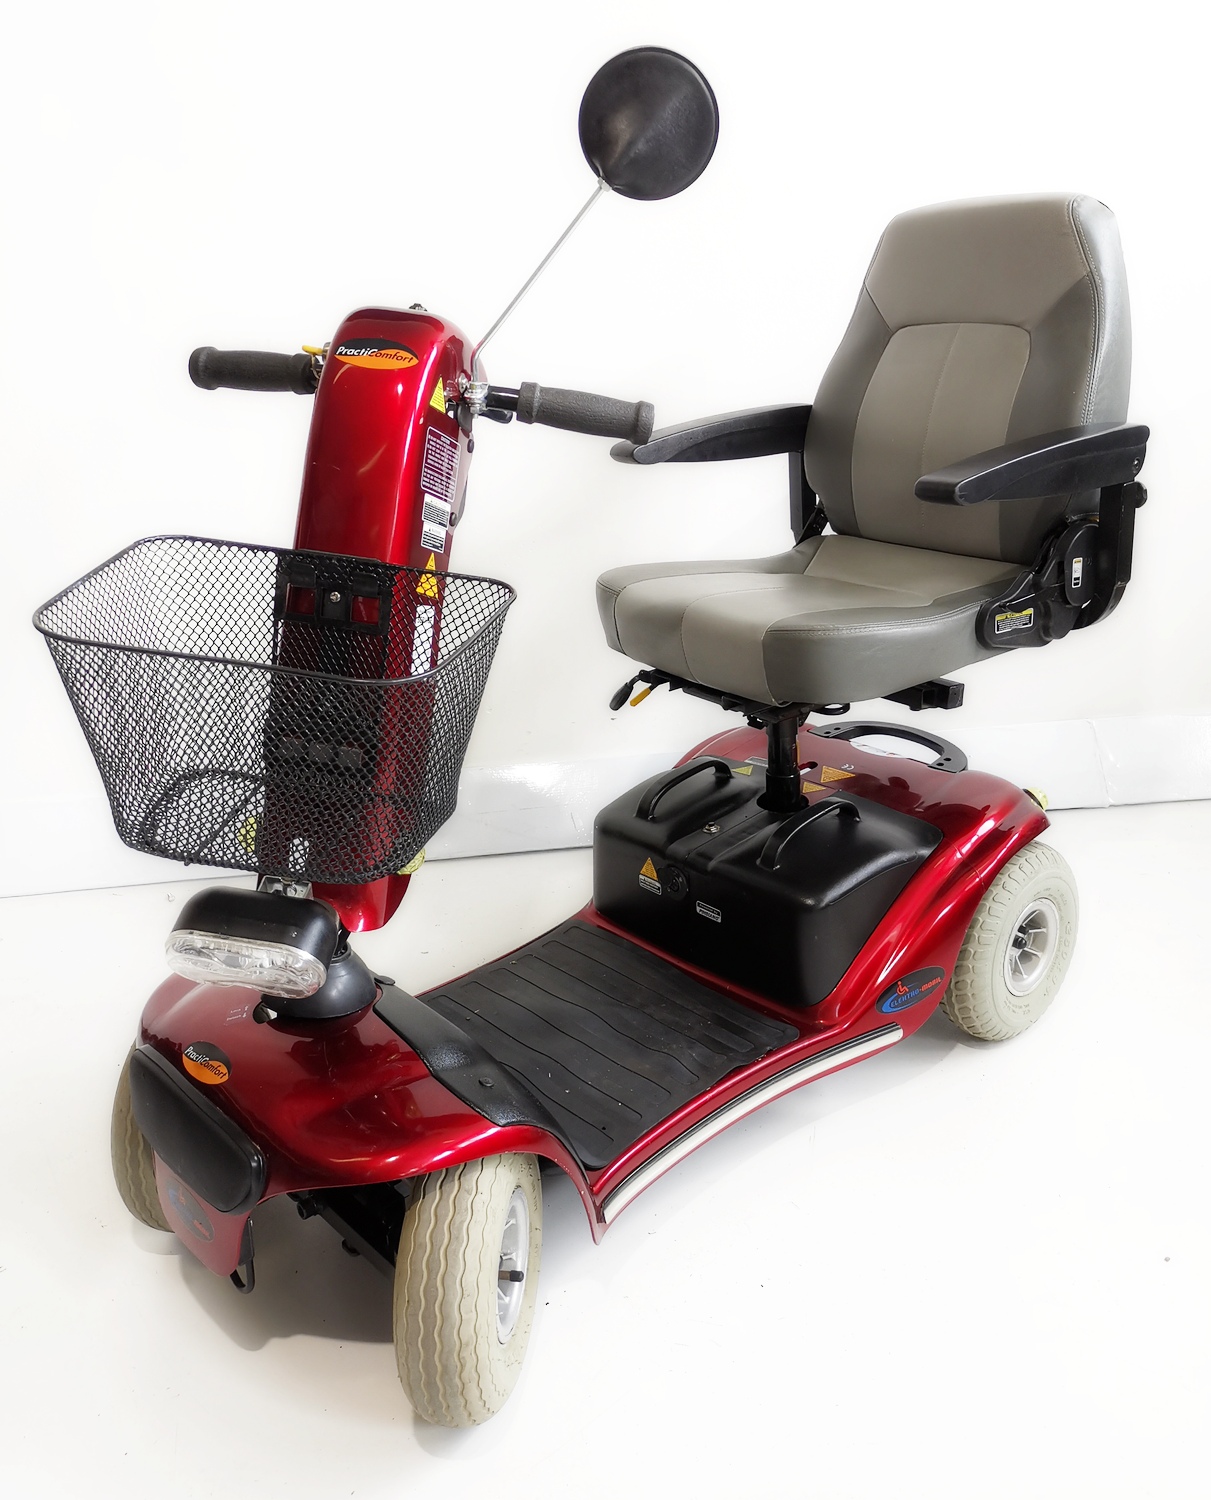 skuter inwalidzki elektryczny practicomfort